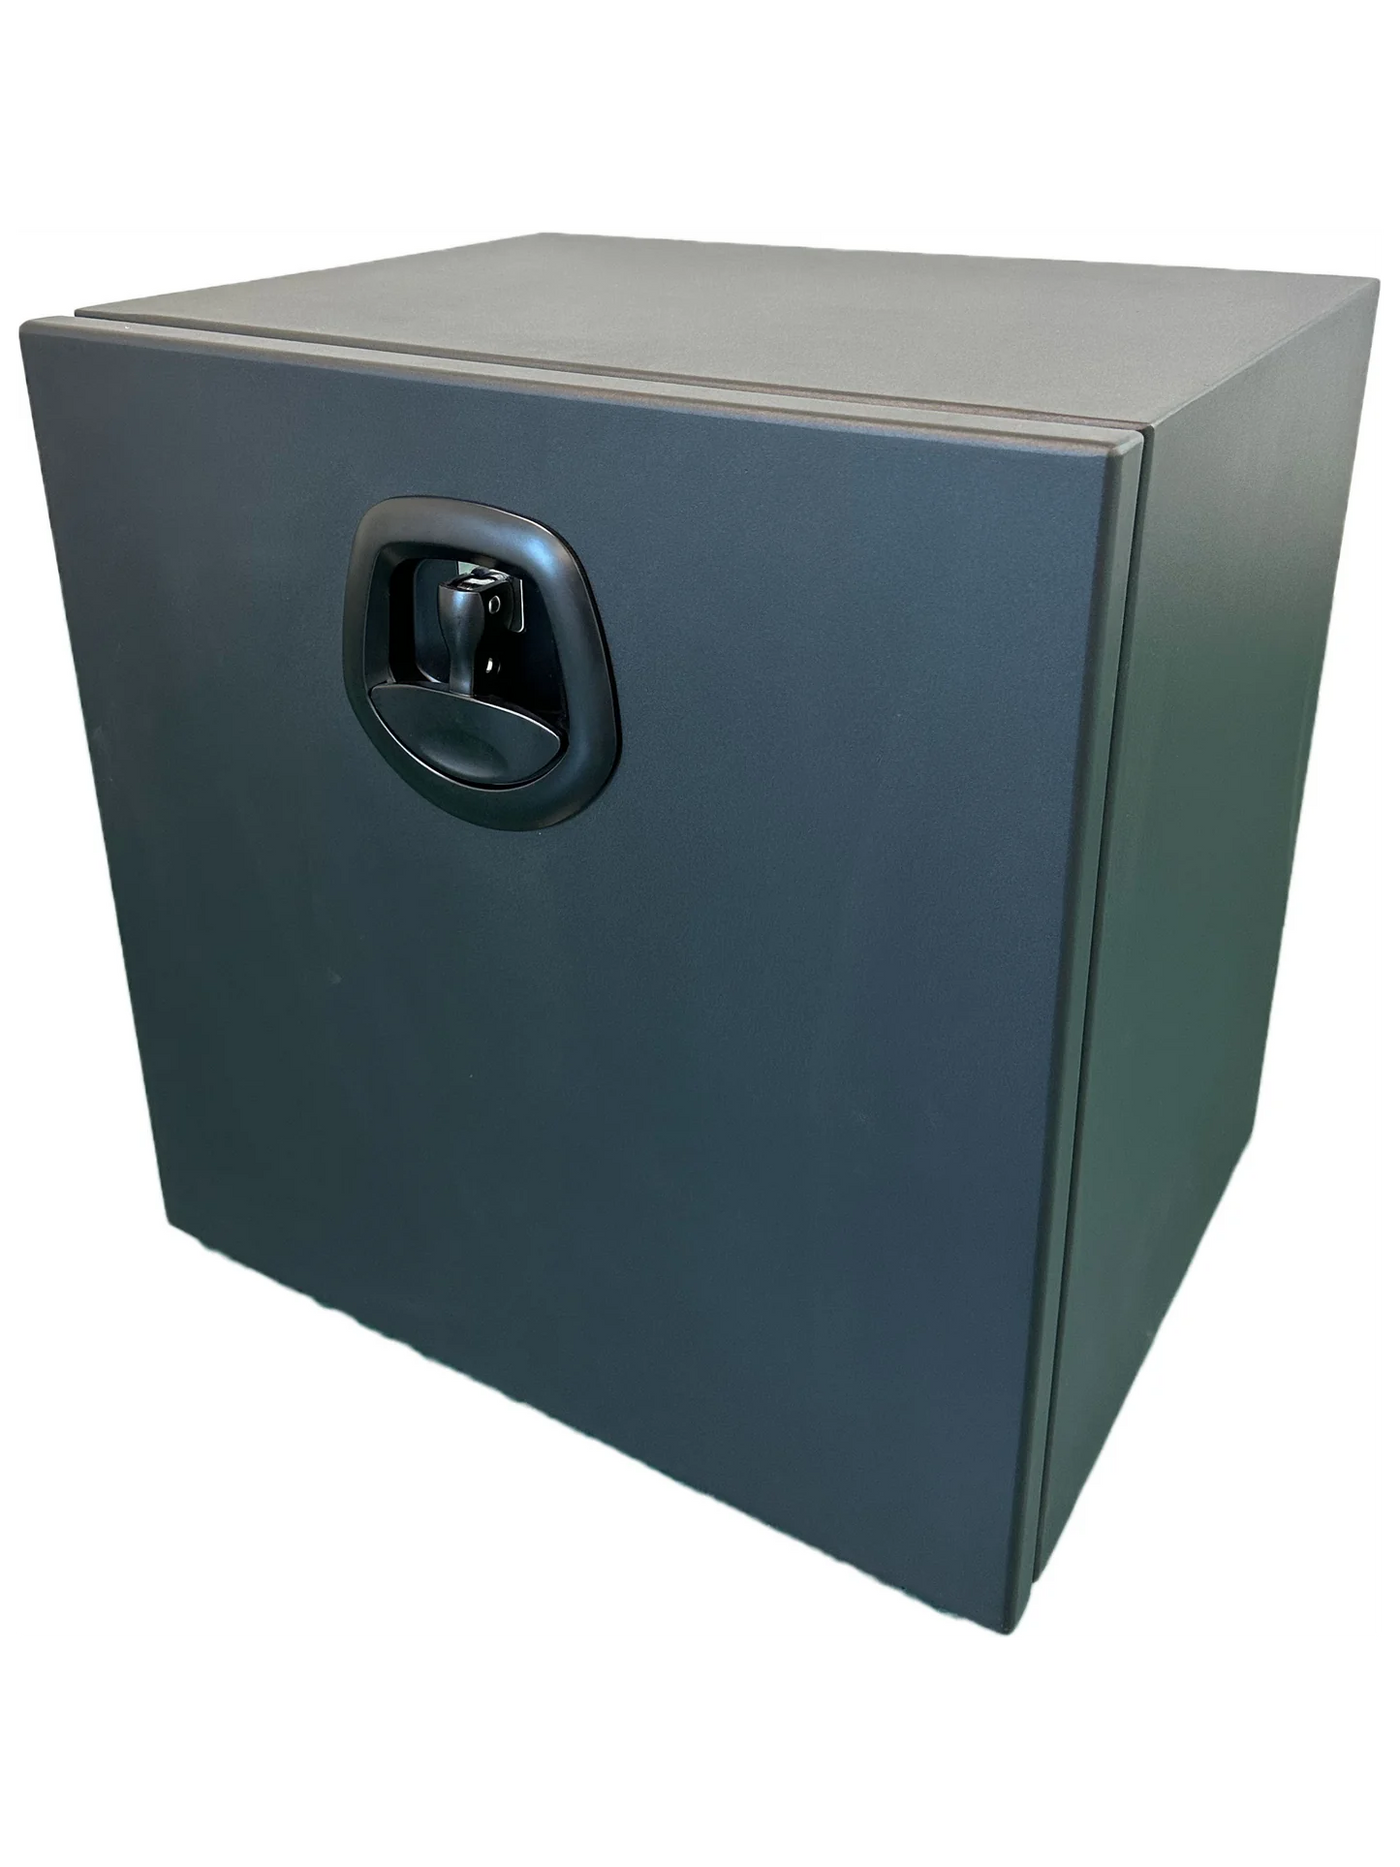 Tec Vanlife Aluminum Storage Box - Grande | Camper Van Storage